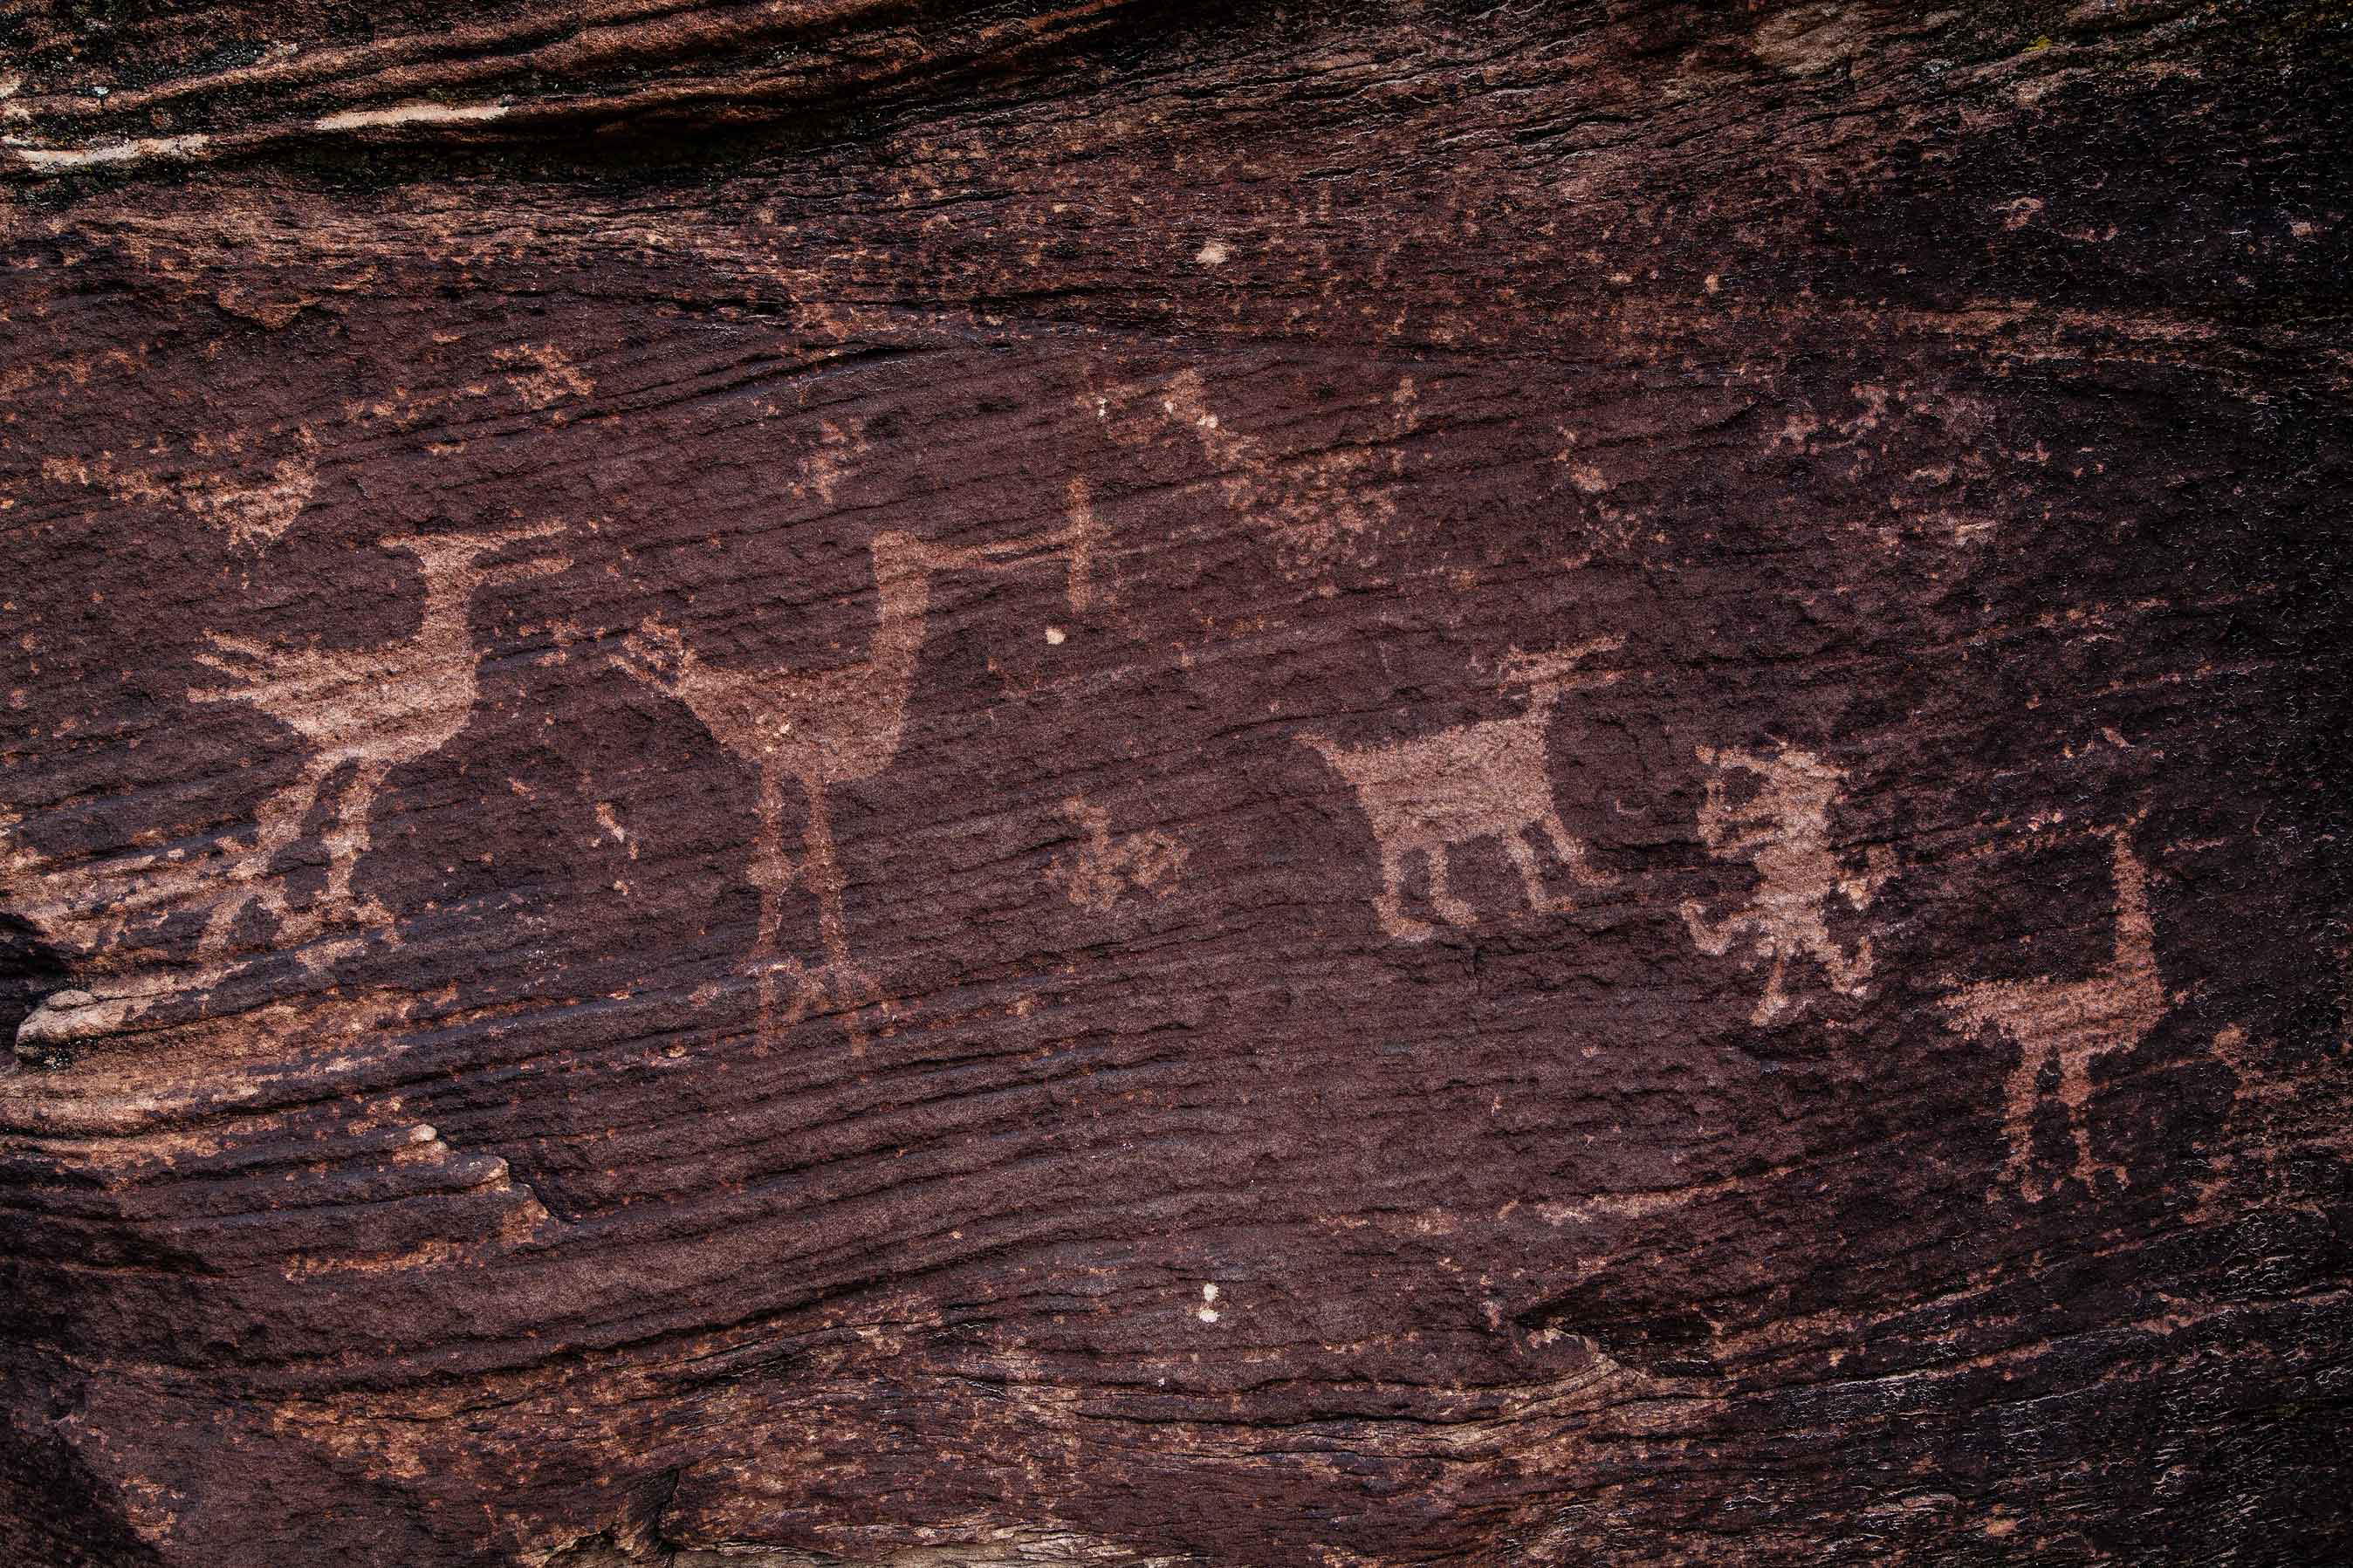 Ancient Ancestral Pueblo petroglyphs along the Puerco River, Arizona.
